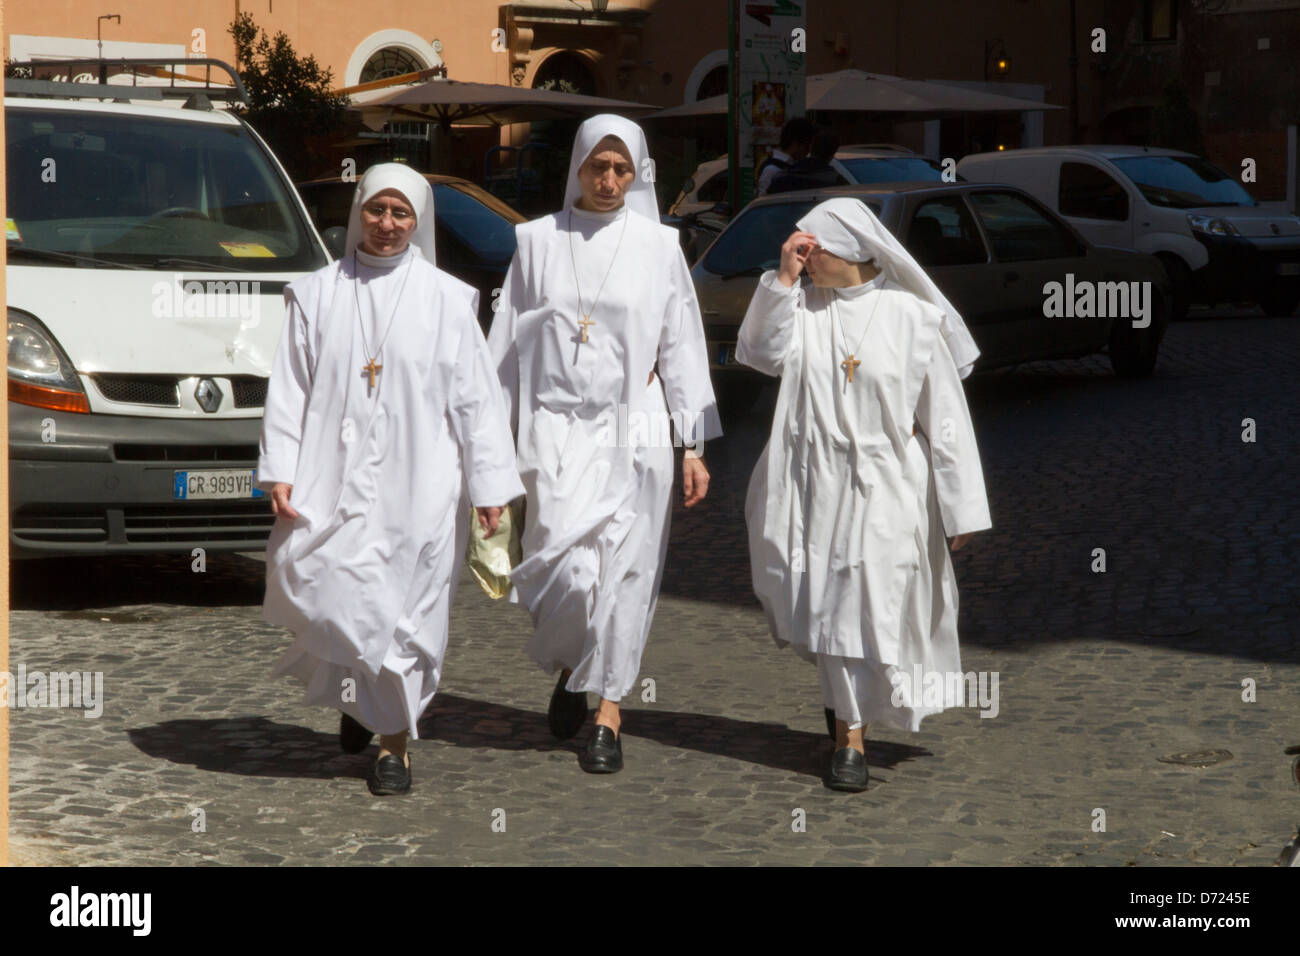 Les nonnes robes blanches rue Rome Italie Europe walkingin Banque D'Images